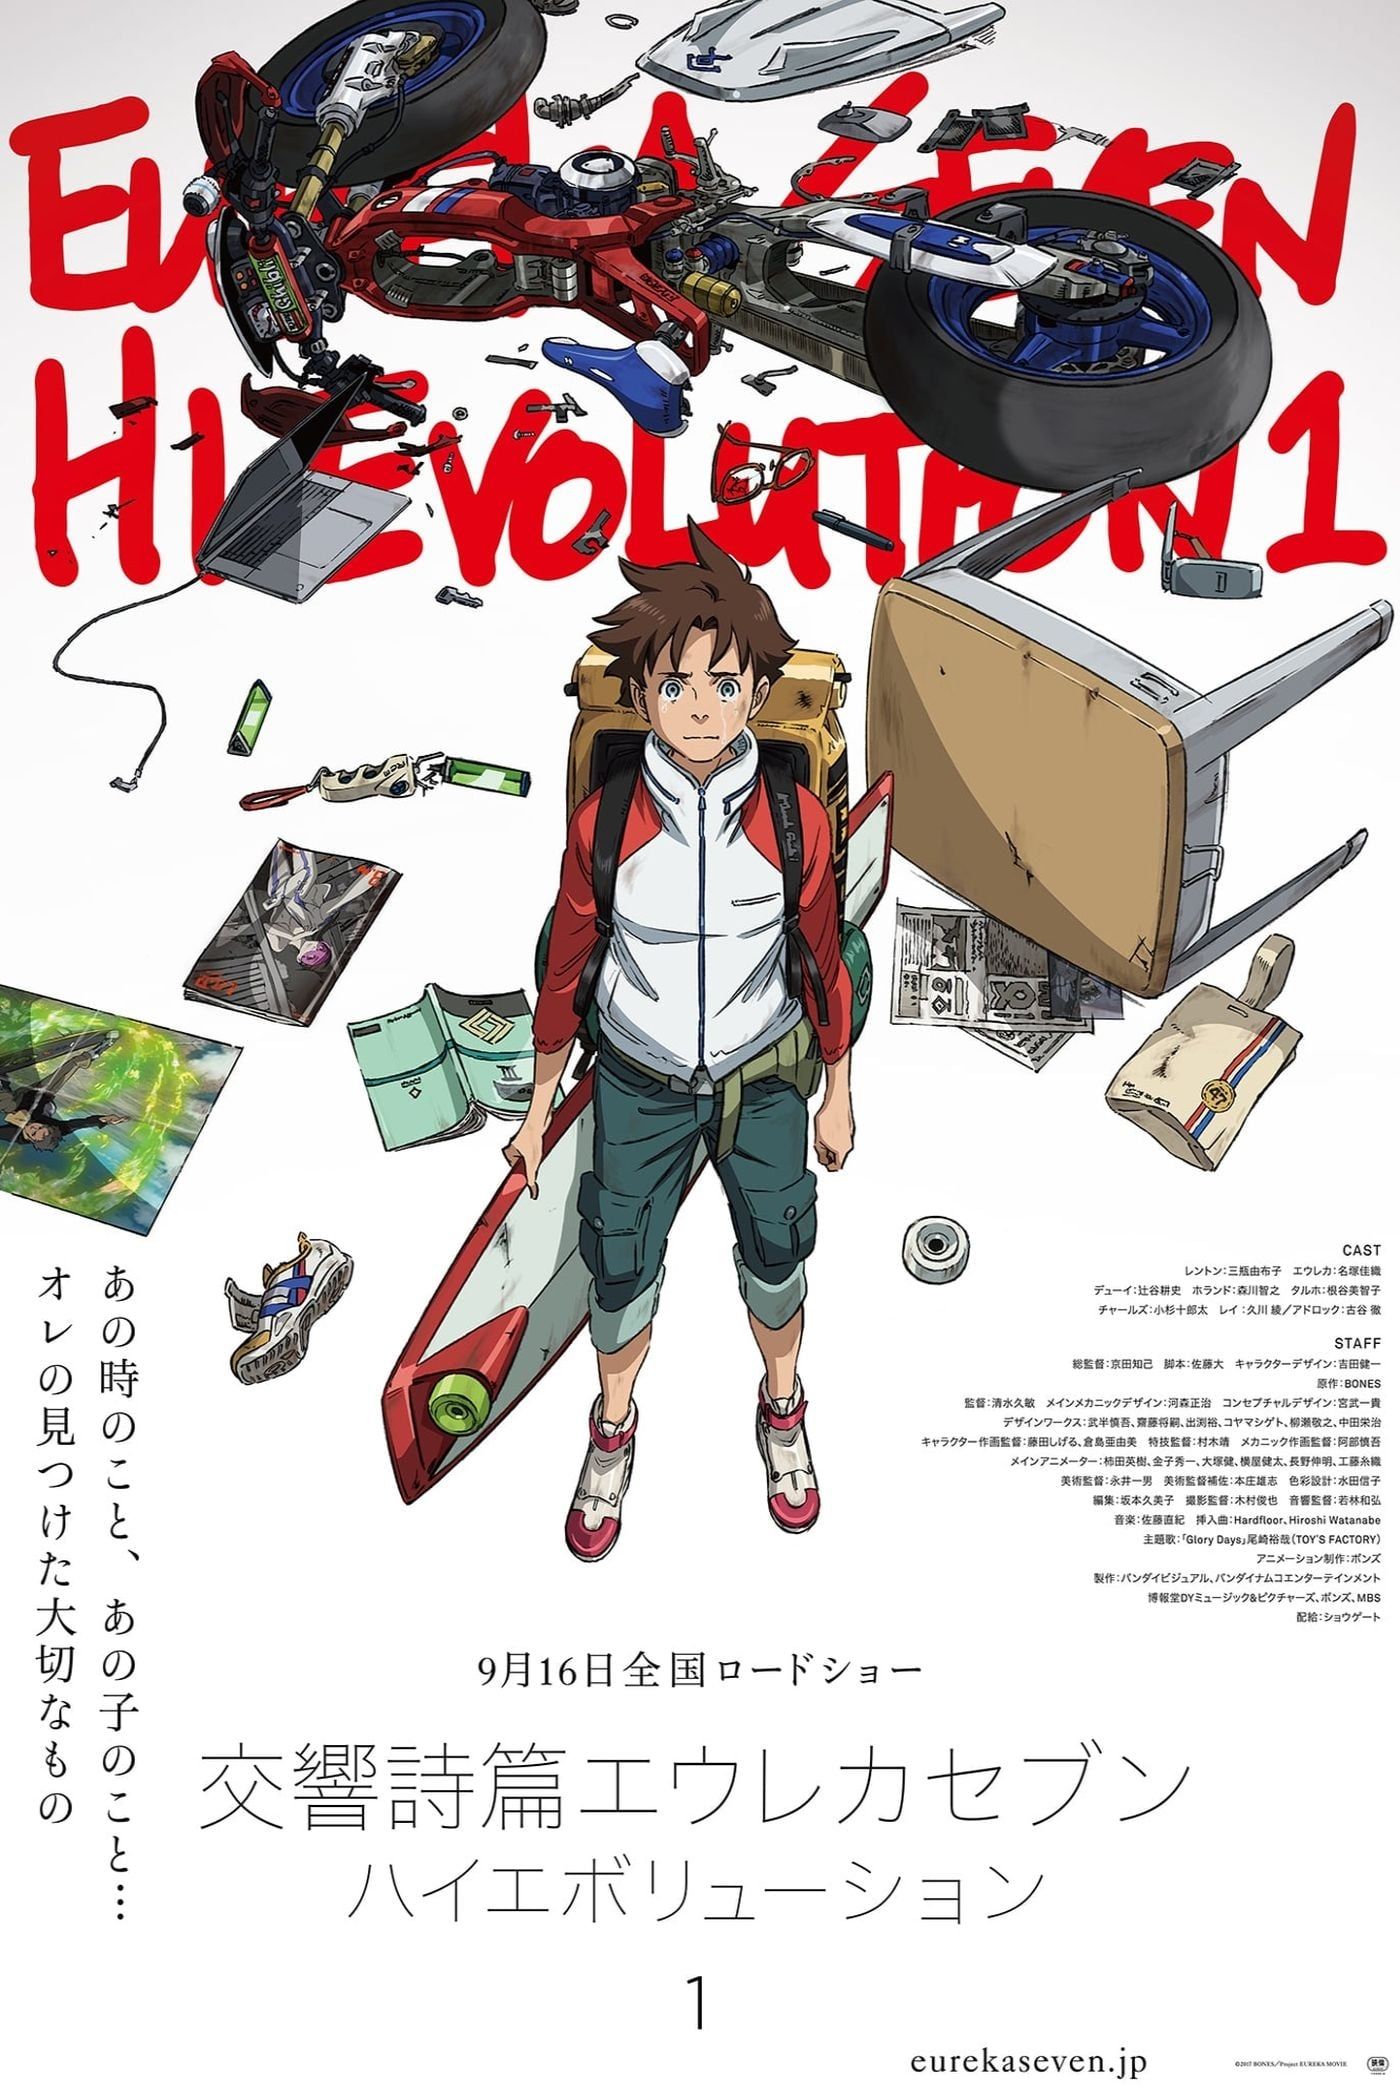 [Full Chapter] Koukyoushihen Eureka Seven Hi-Evolution 2: Anemone (Movie) (Sub)